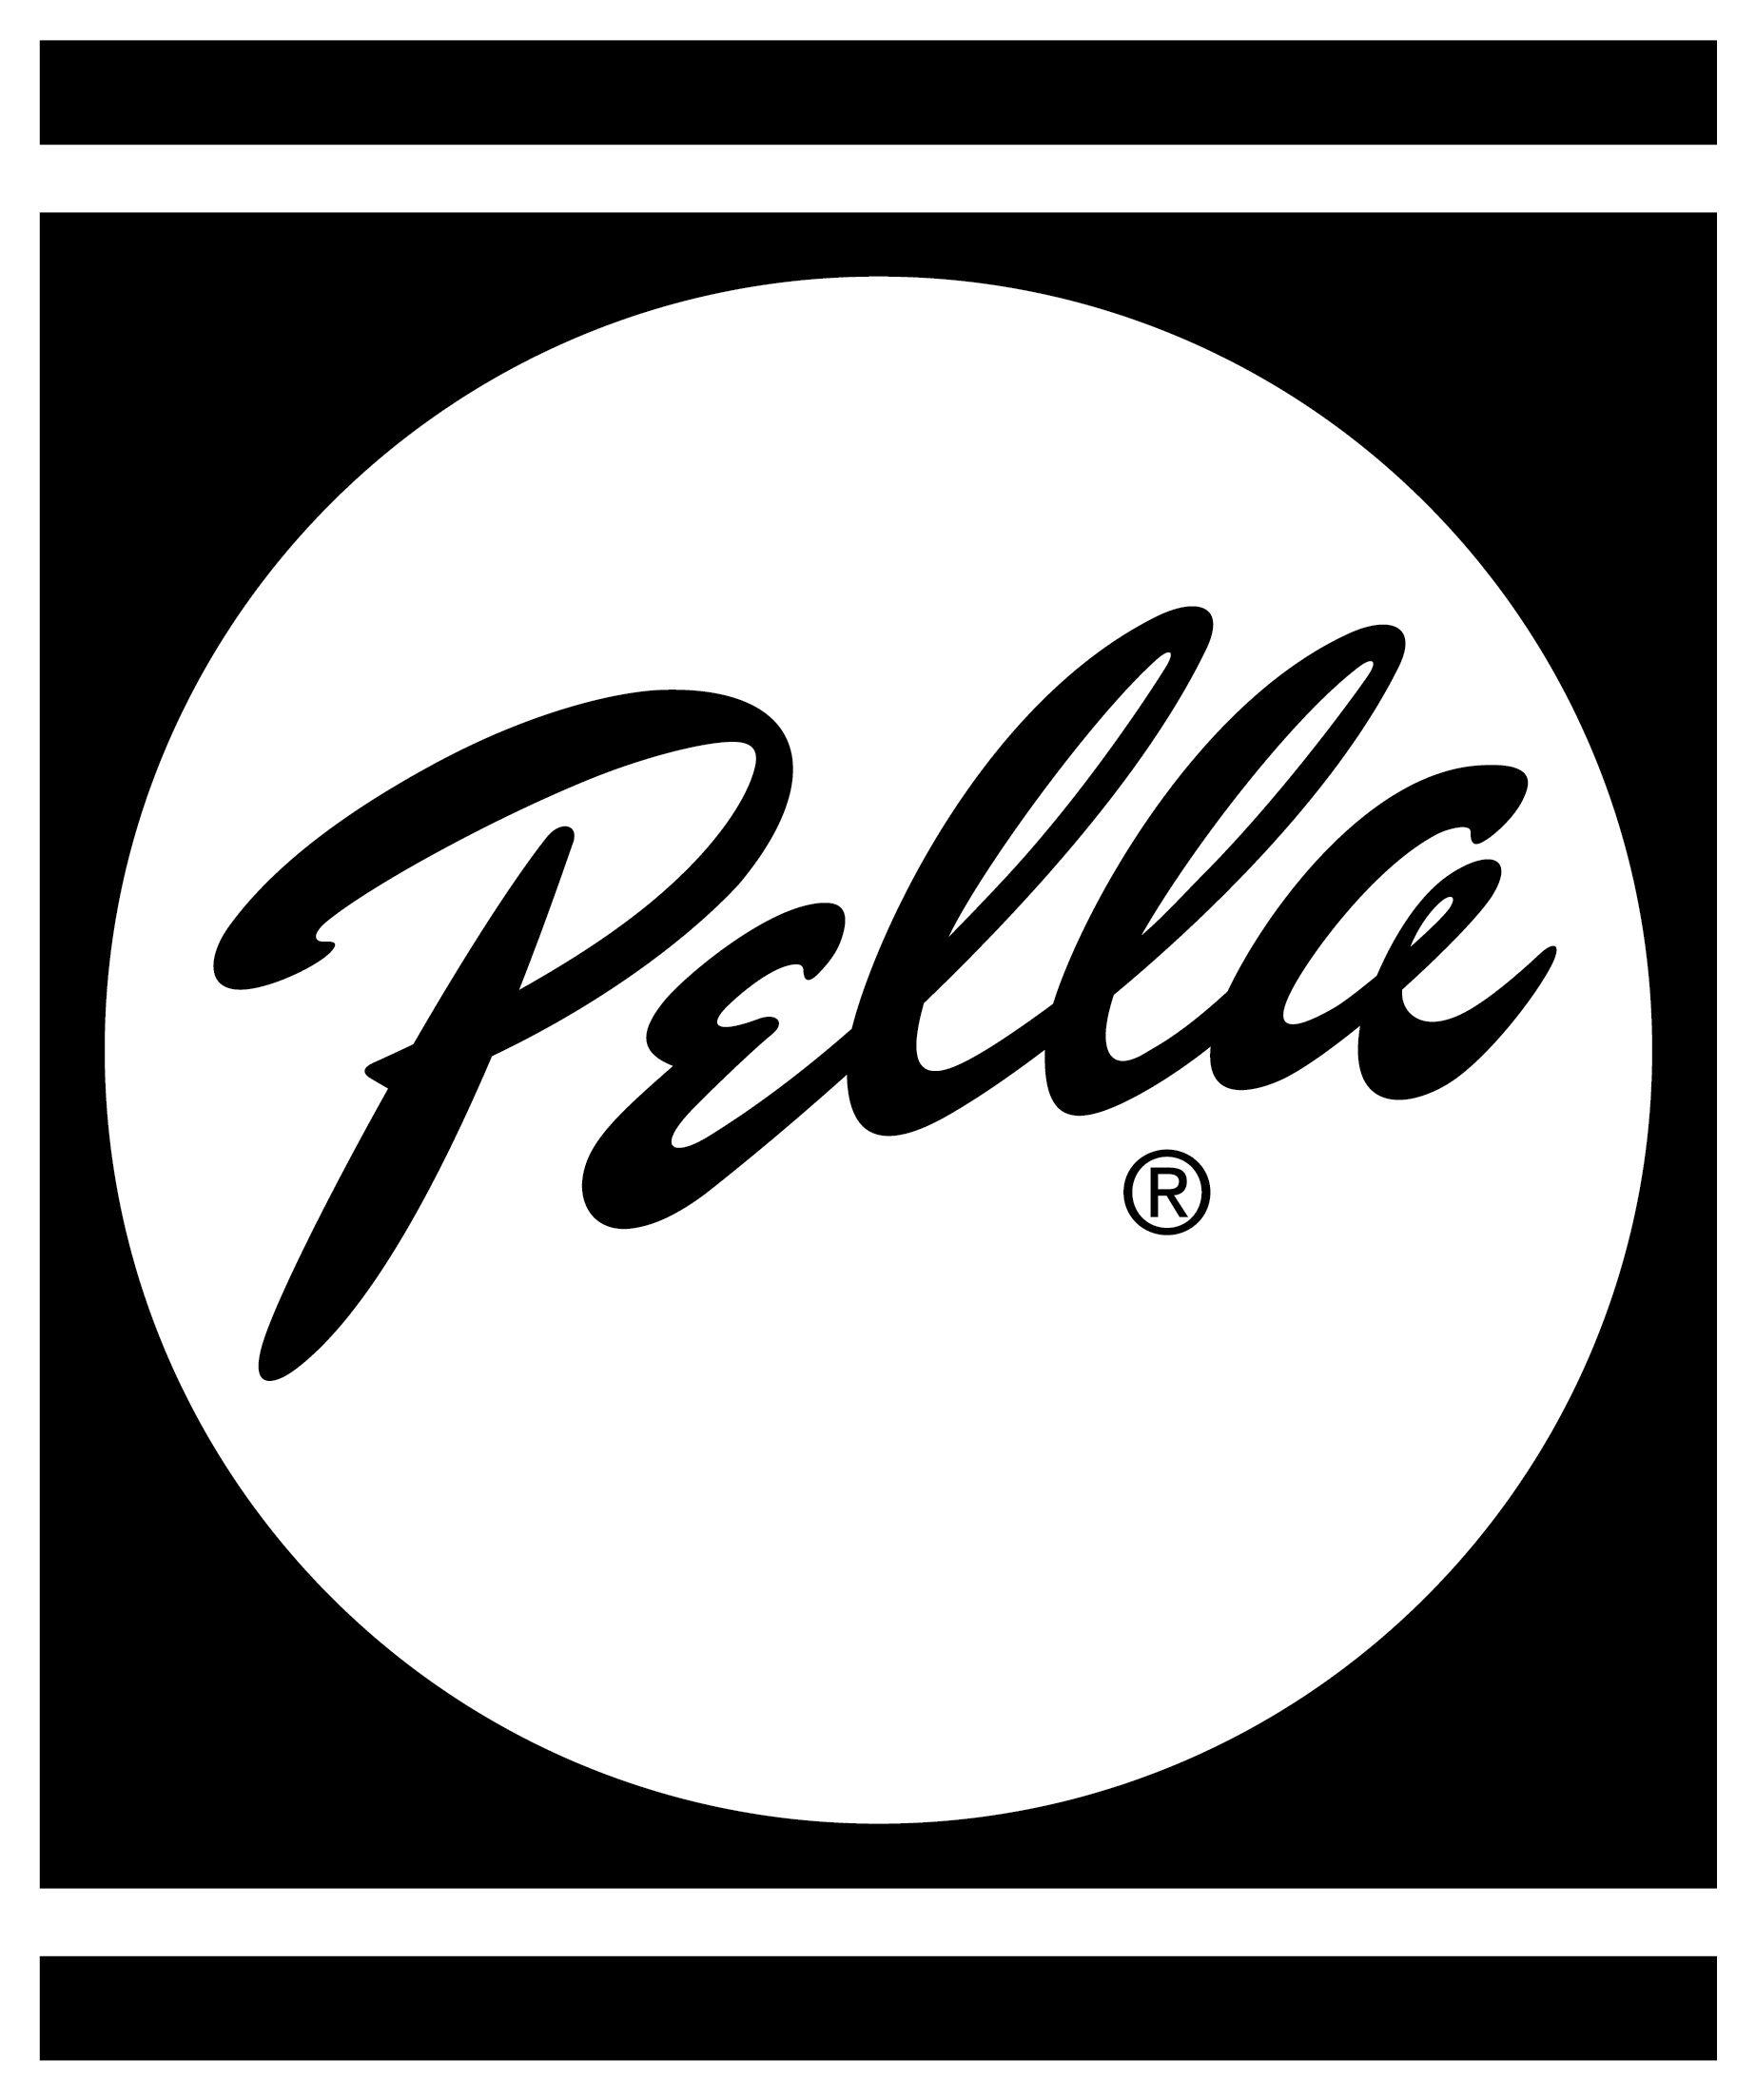 Black and White Bullseye Logo - Pella Corporation Logo